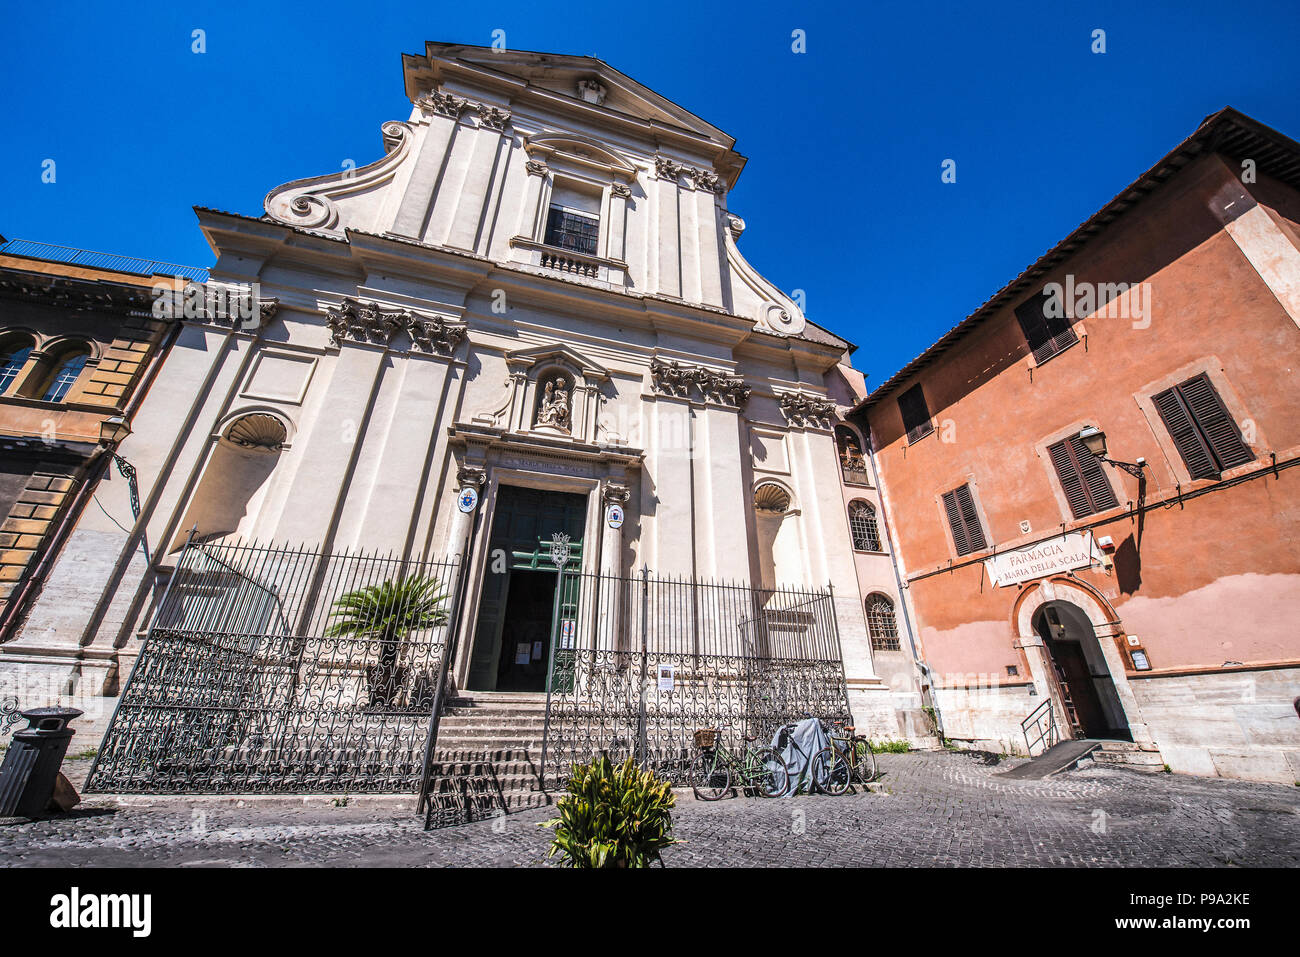 Piazza della Scala, with the face of the Church of Santa Maria della Scala at left and the old Pharmacy Santa Maria della Scala at right, in Trastevere quarter, Rome, Italy Stock Photo